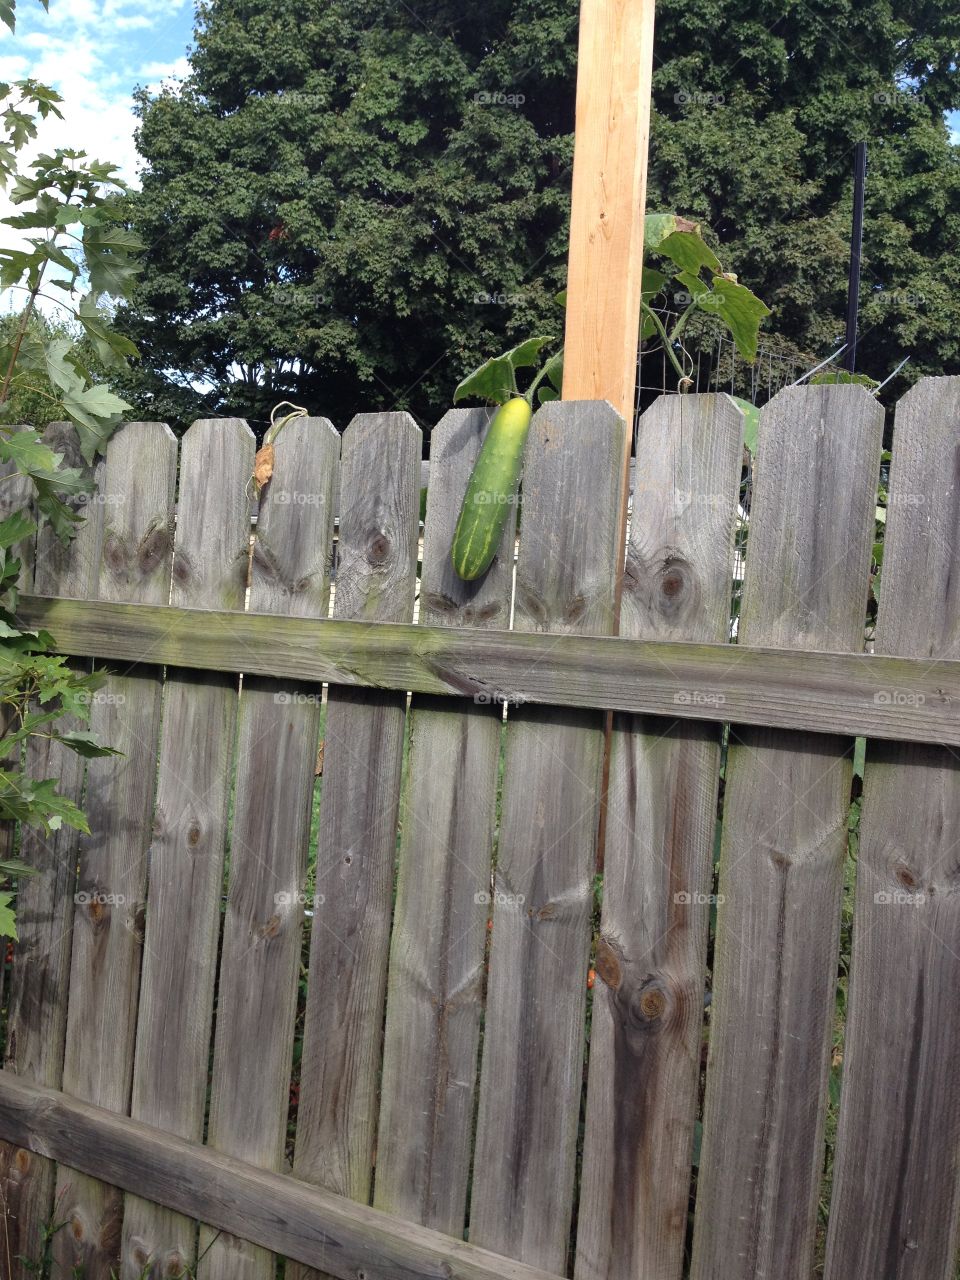 Fence cucumber